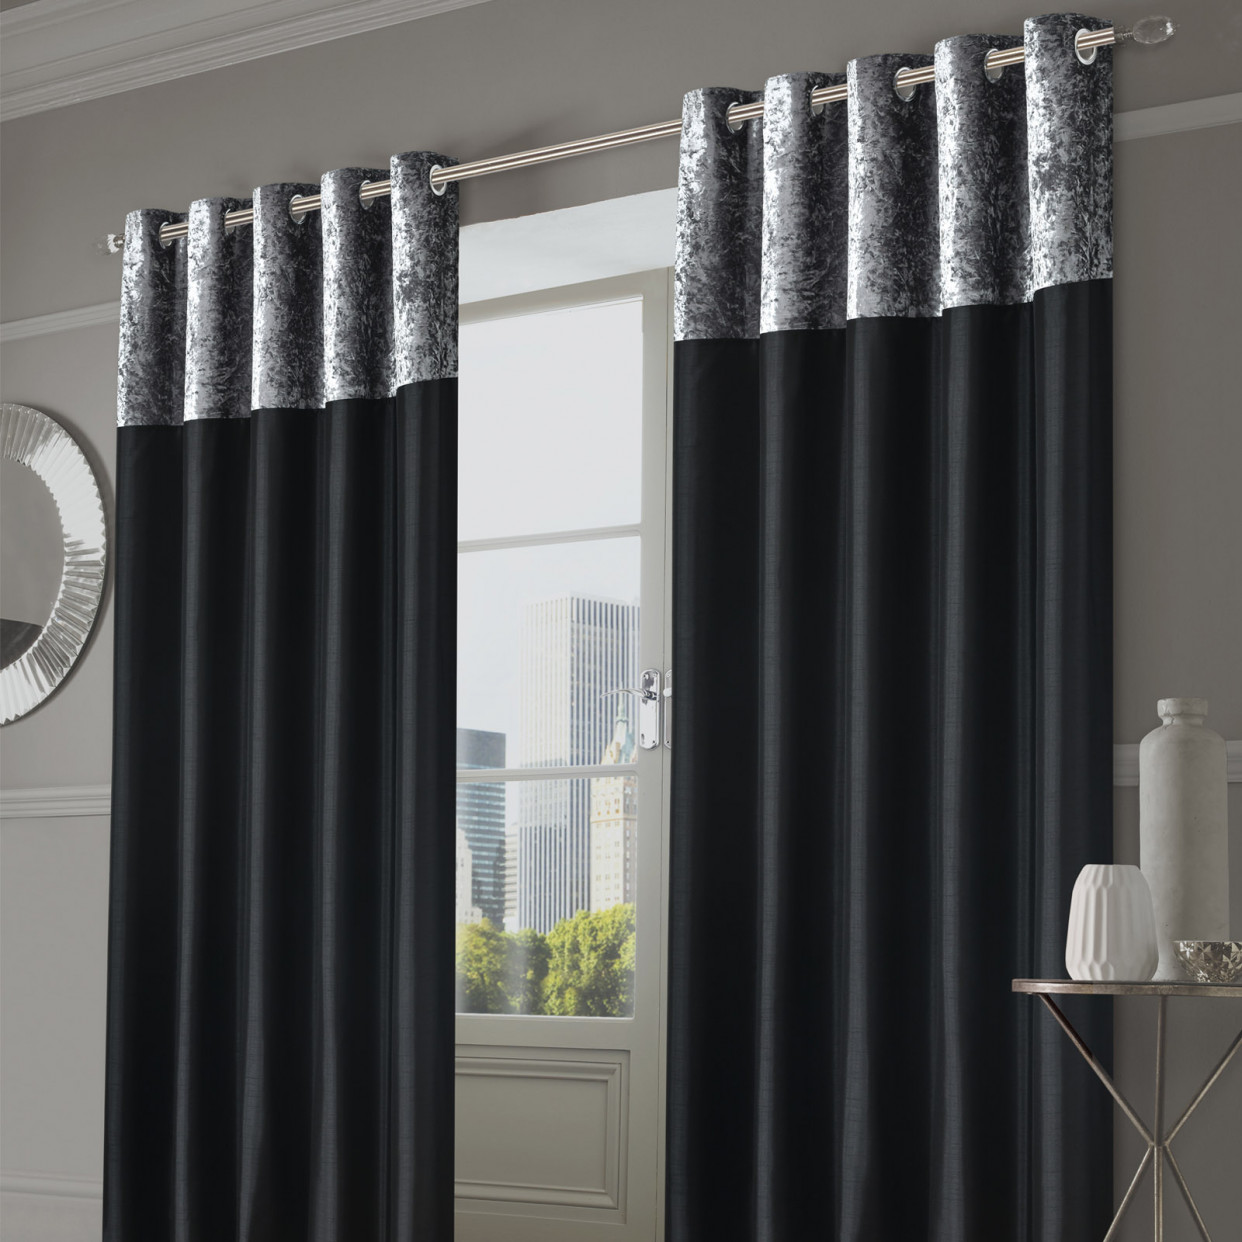 Sienna Home Manhattan Crushed Velvet Band Eyelet Curtains - Black, 46" x 90">